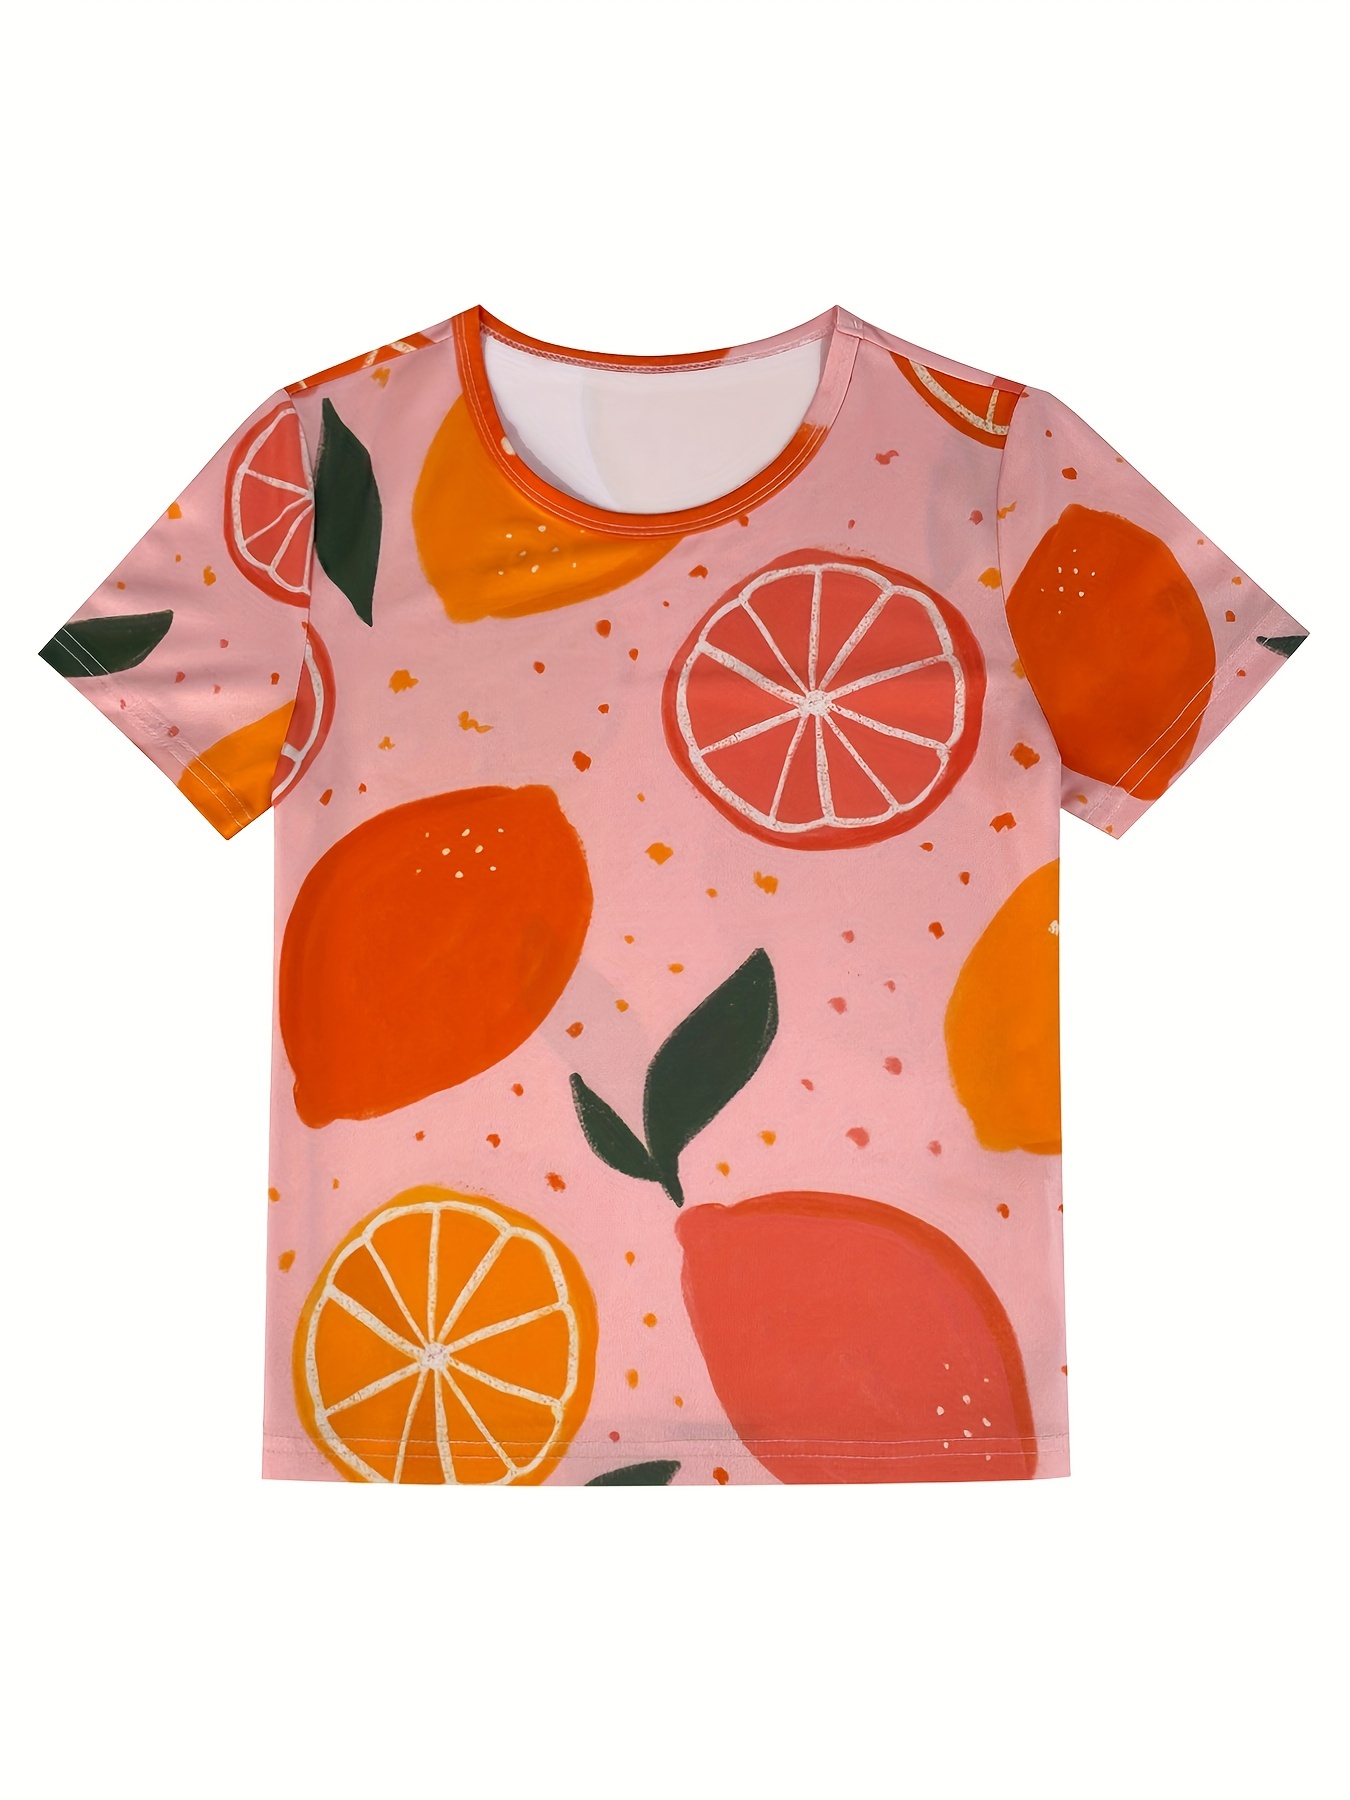 Camiseta de tirantes de rizo lisa naranja niña